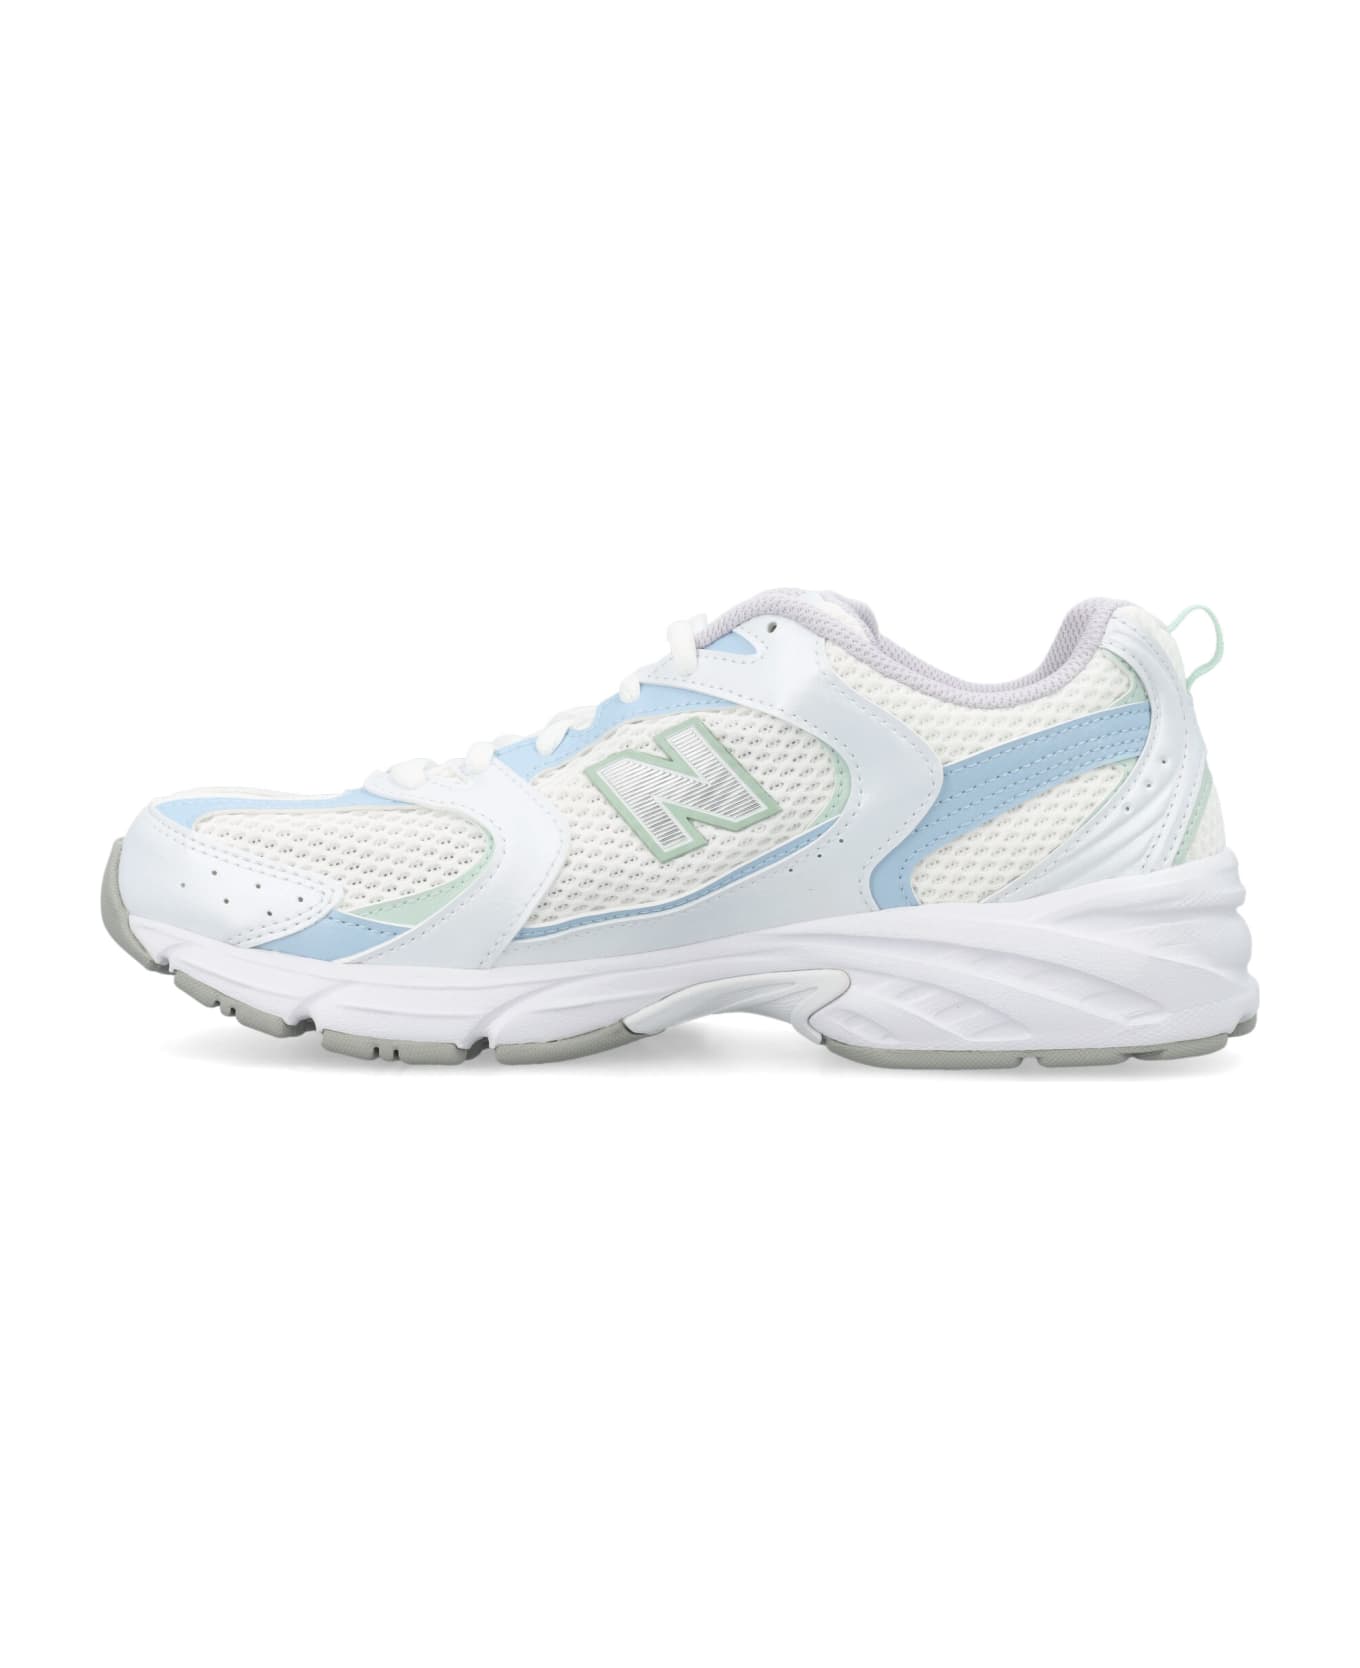 New Balance 530 Sneakers - WHITE/LIGHT BLUE